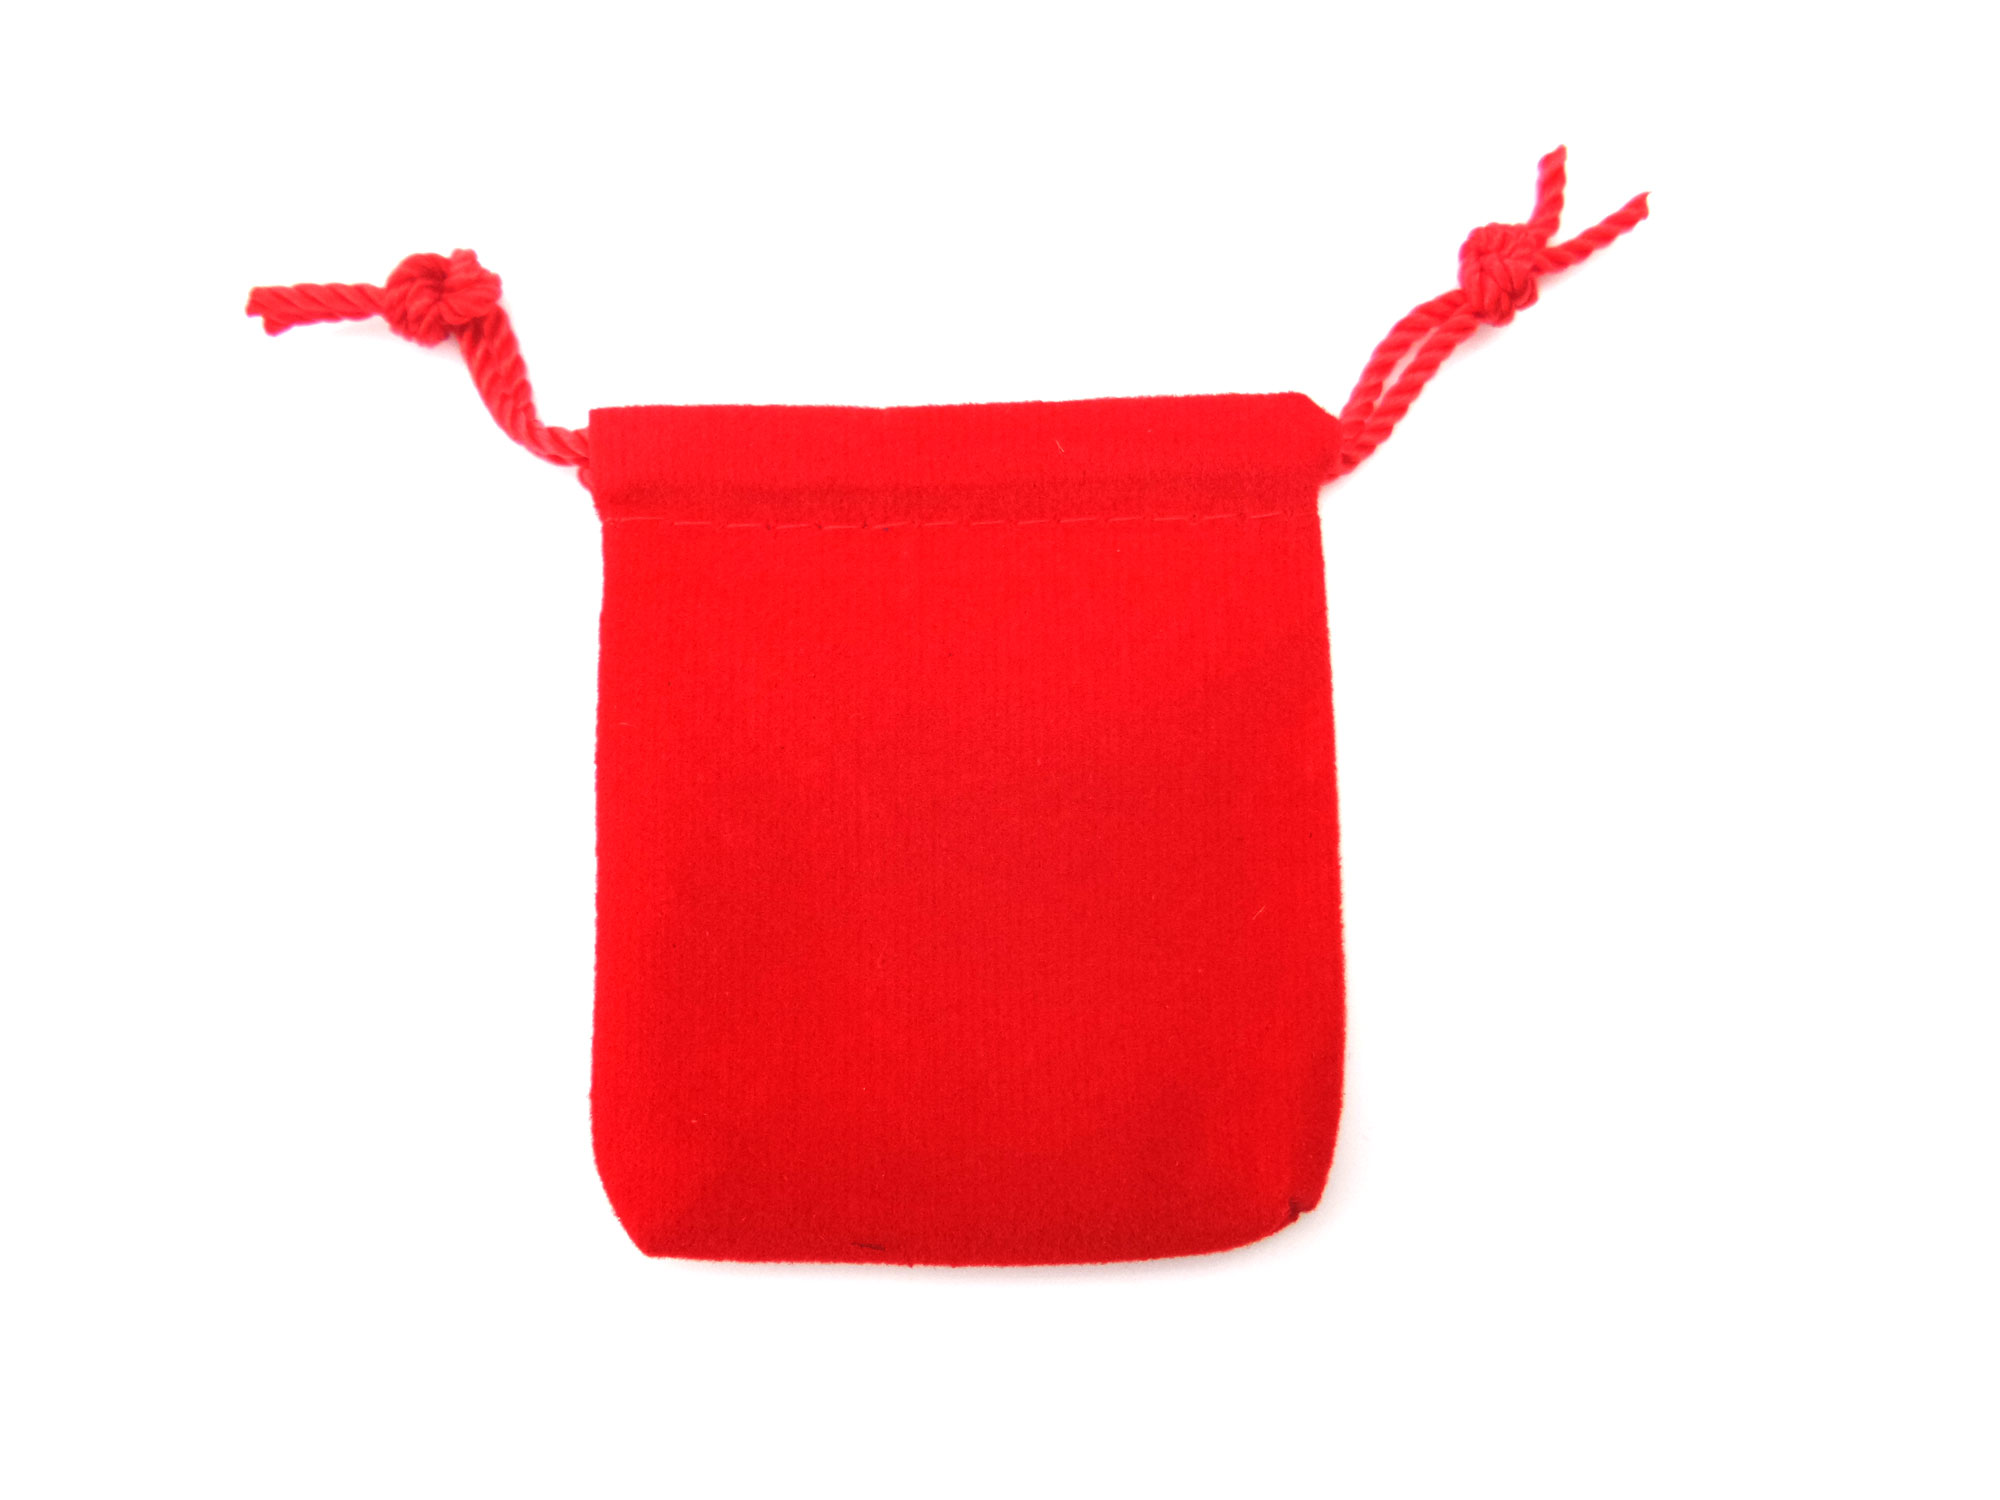 PY Beauty ถุงกำมะหยี่สีแดง สำหรับใช้ใส่เครื่องประดับ ขนาด 6.5x7.5 เซนติเมตร จำนวน 12 ใบ ราคา 99 บาทเท่านั้นค่ะ+++ร้านนี้ขายแต่ของแท้ค่ะ+++